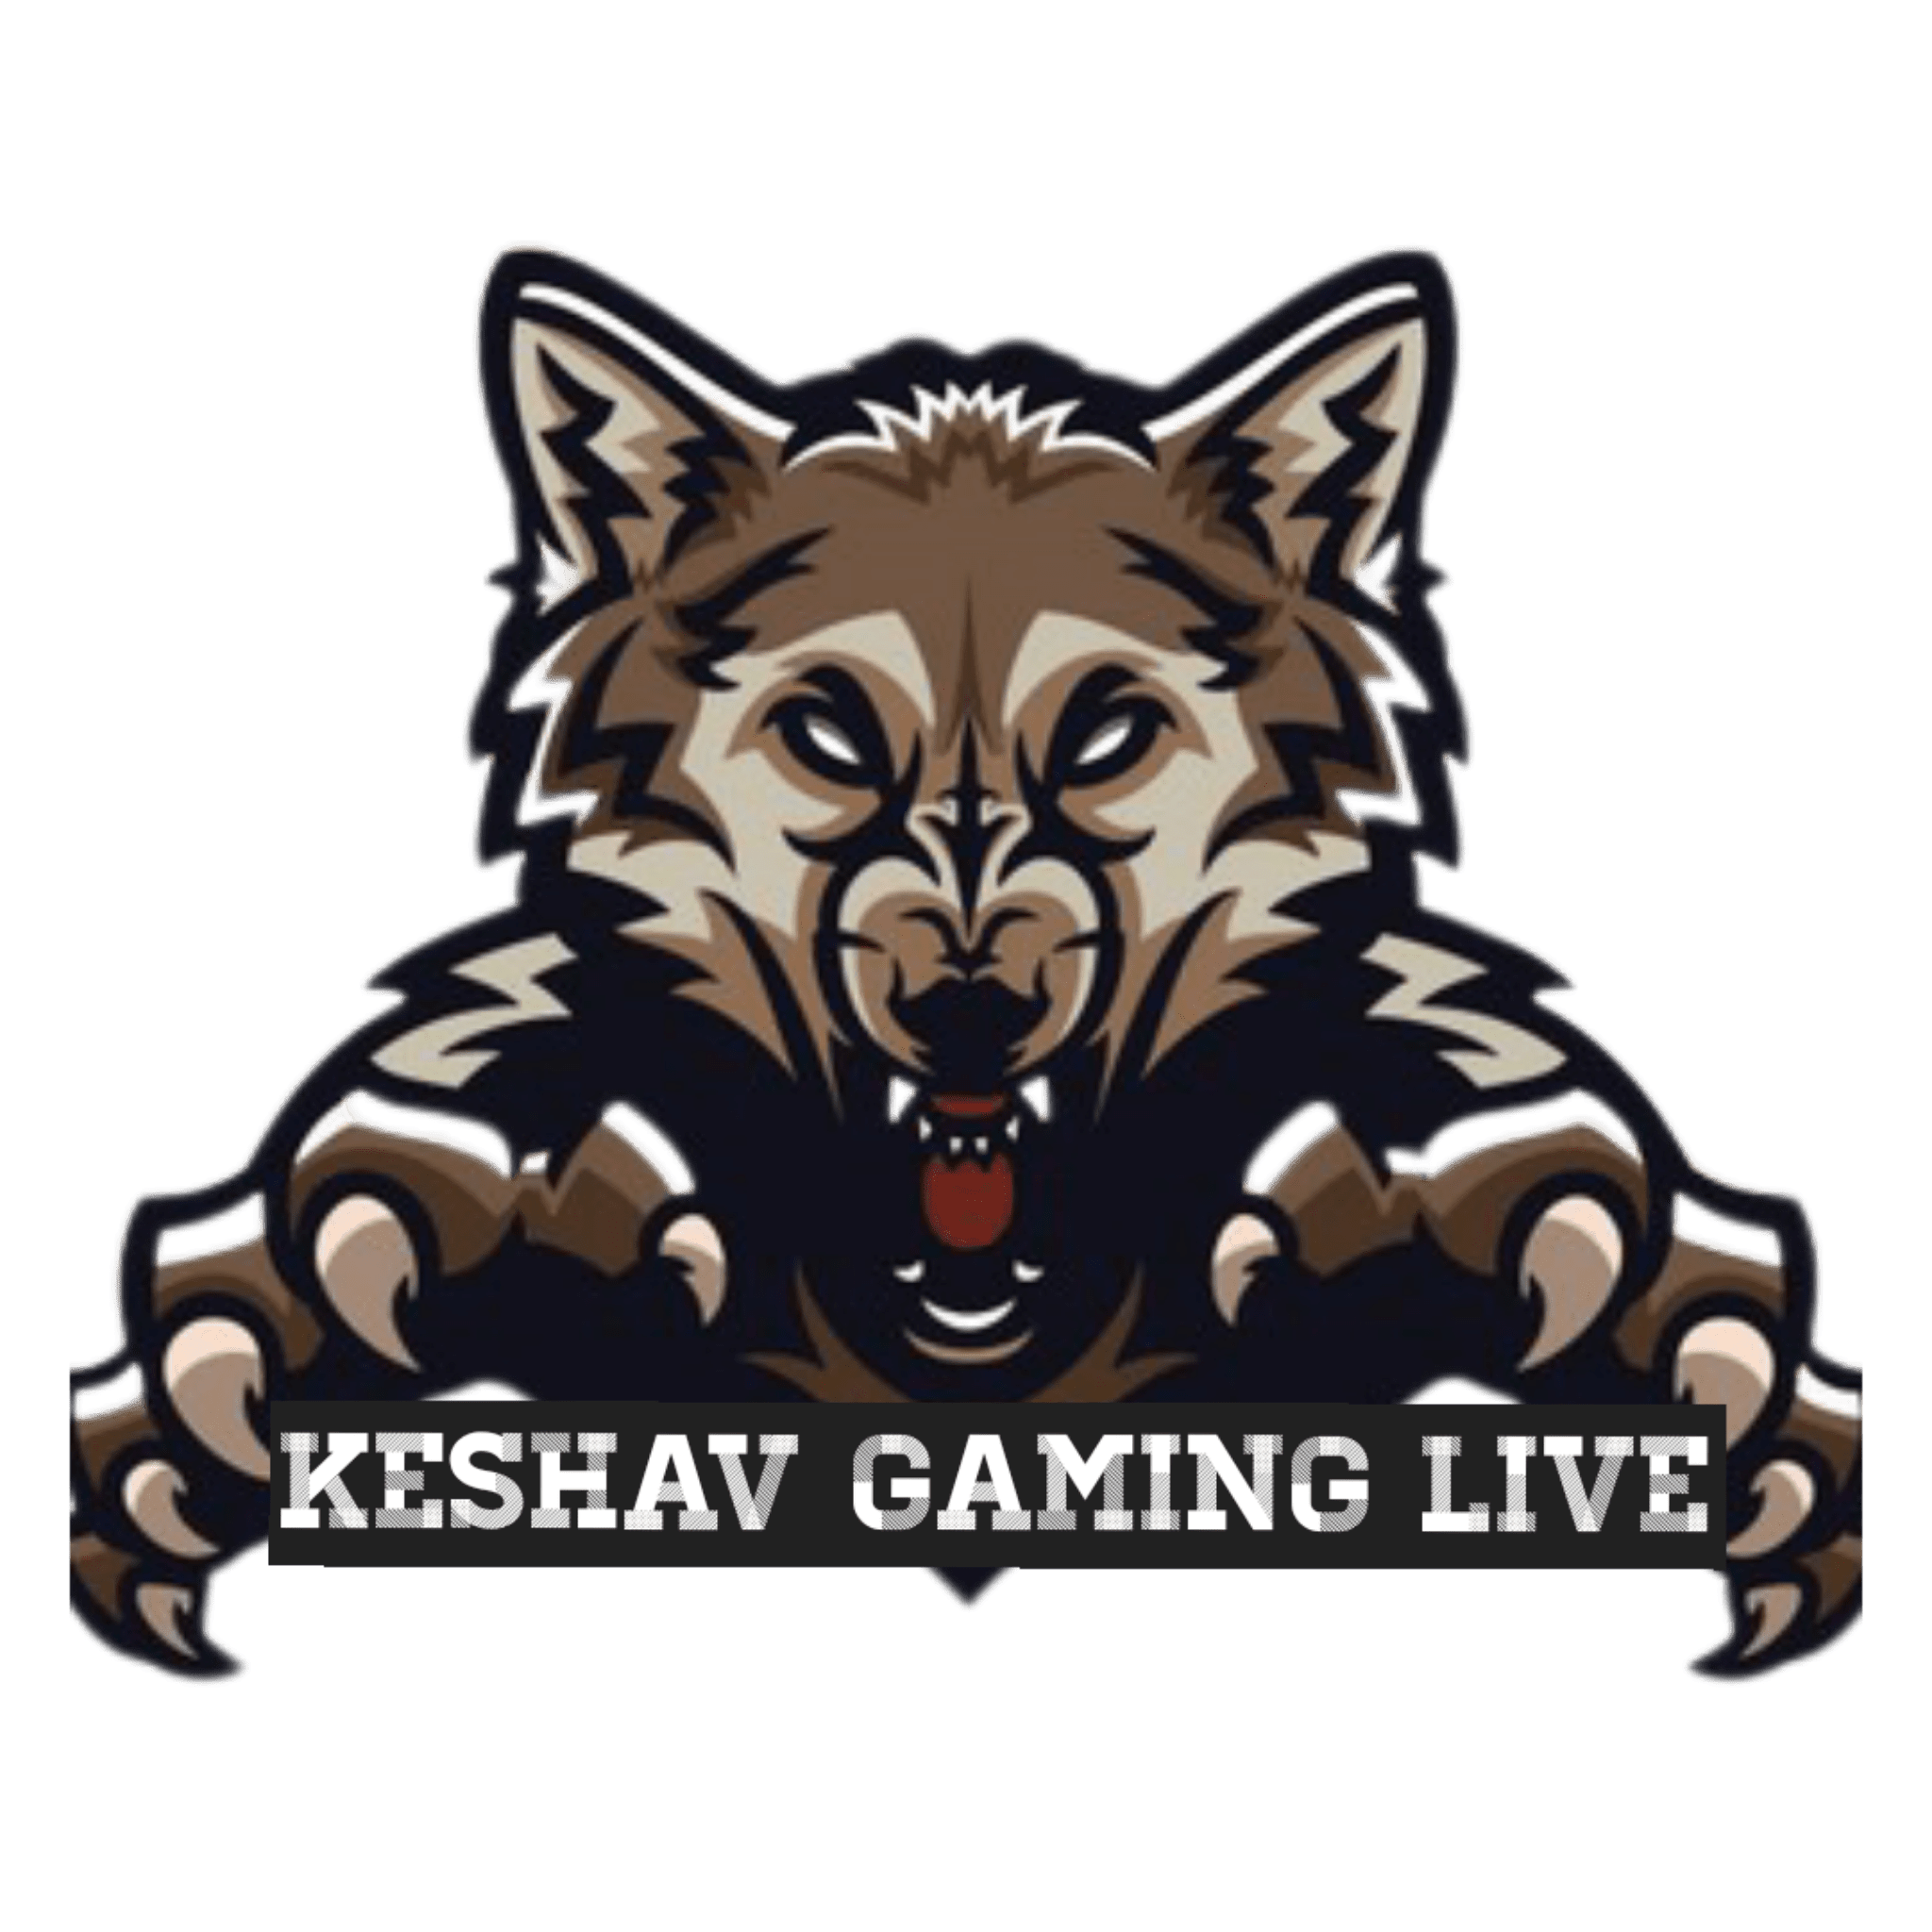 Keshav Gaming Live